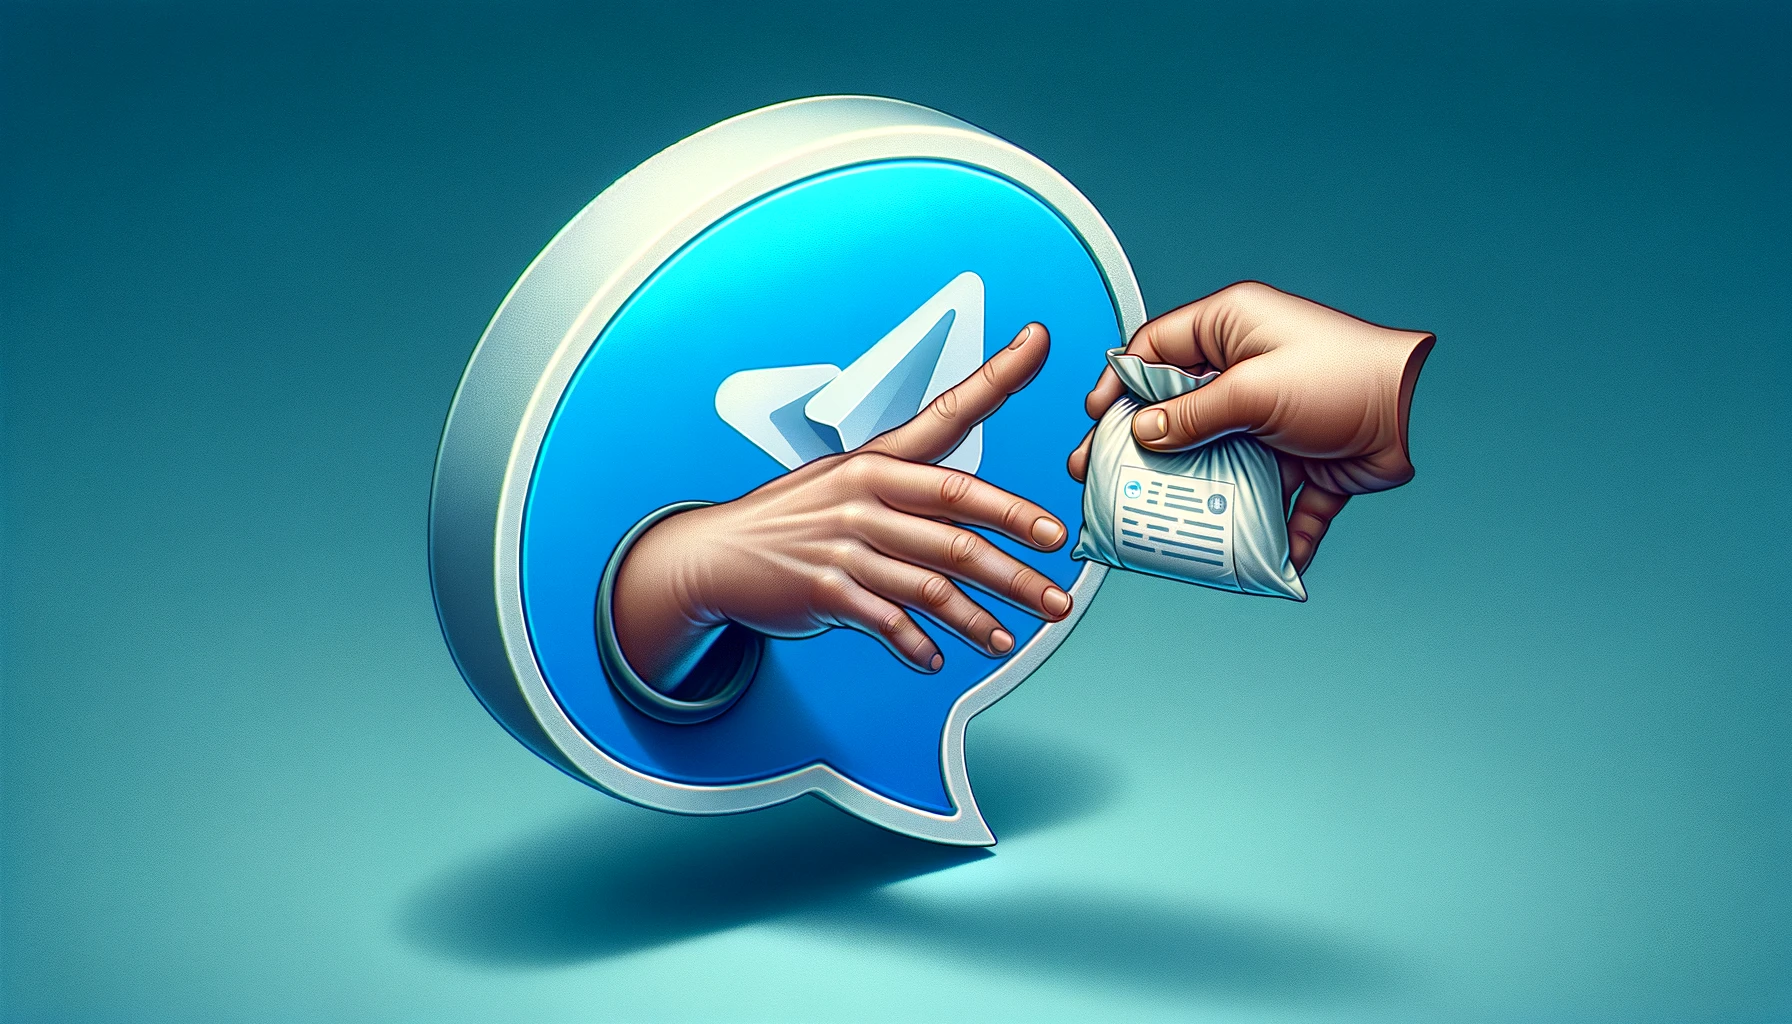 Telegram is the new Darknet